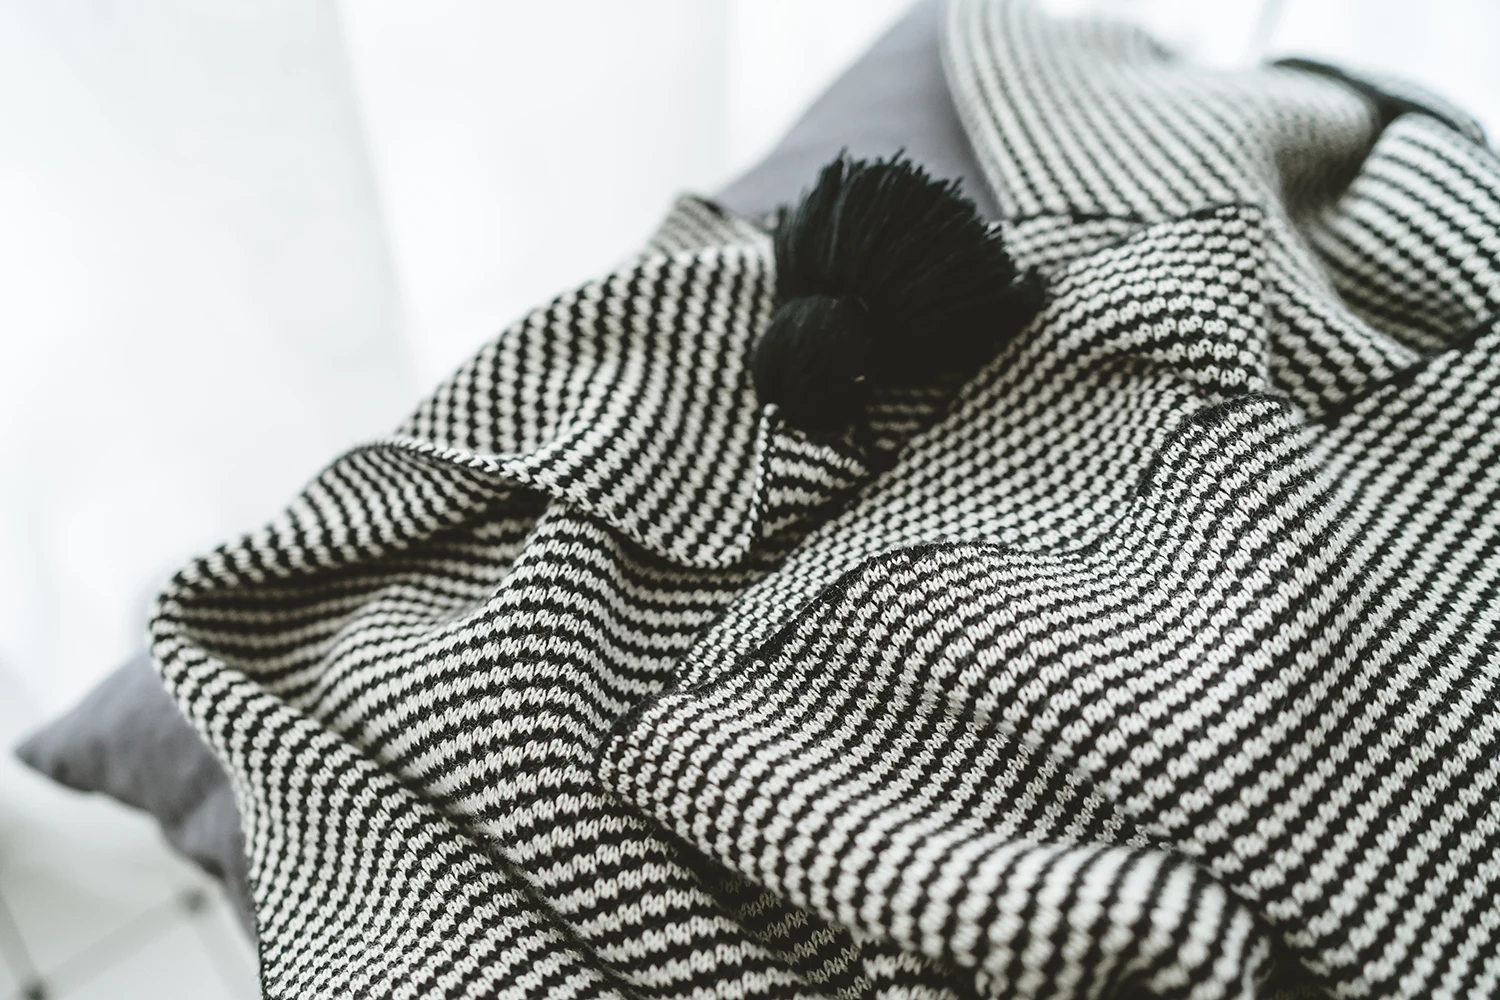 Classic black and white texture tassel plaid cotton blanket